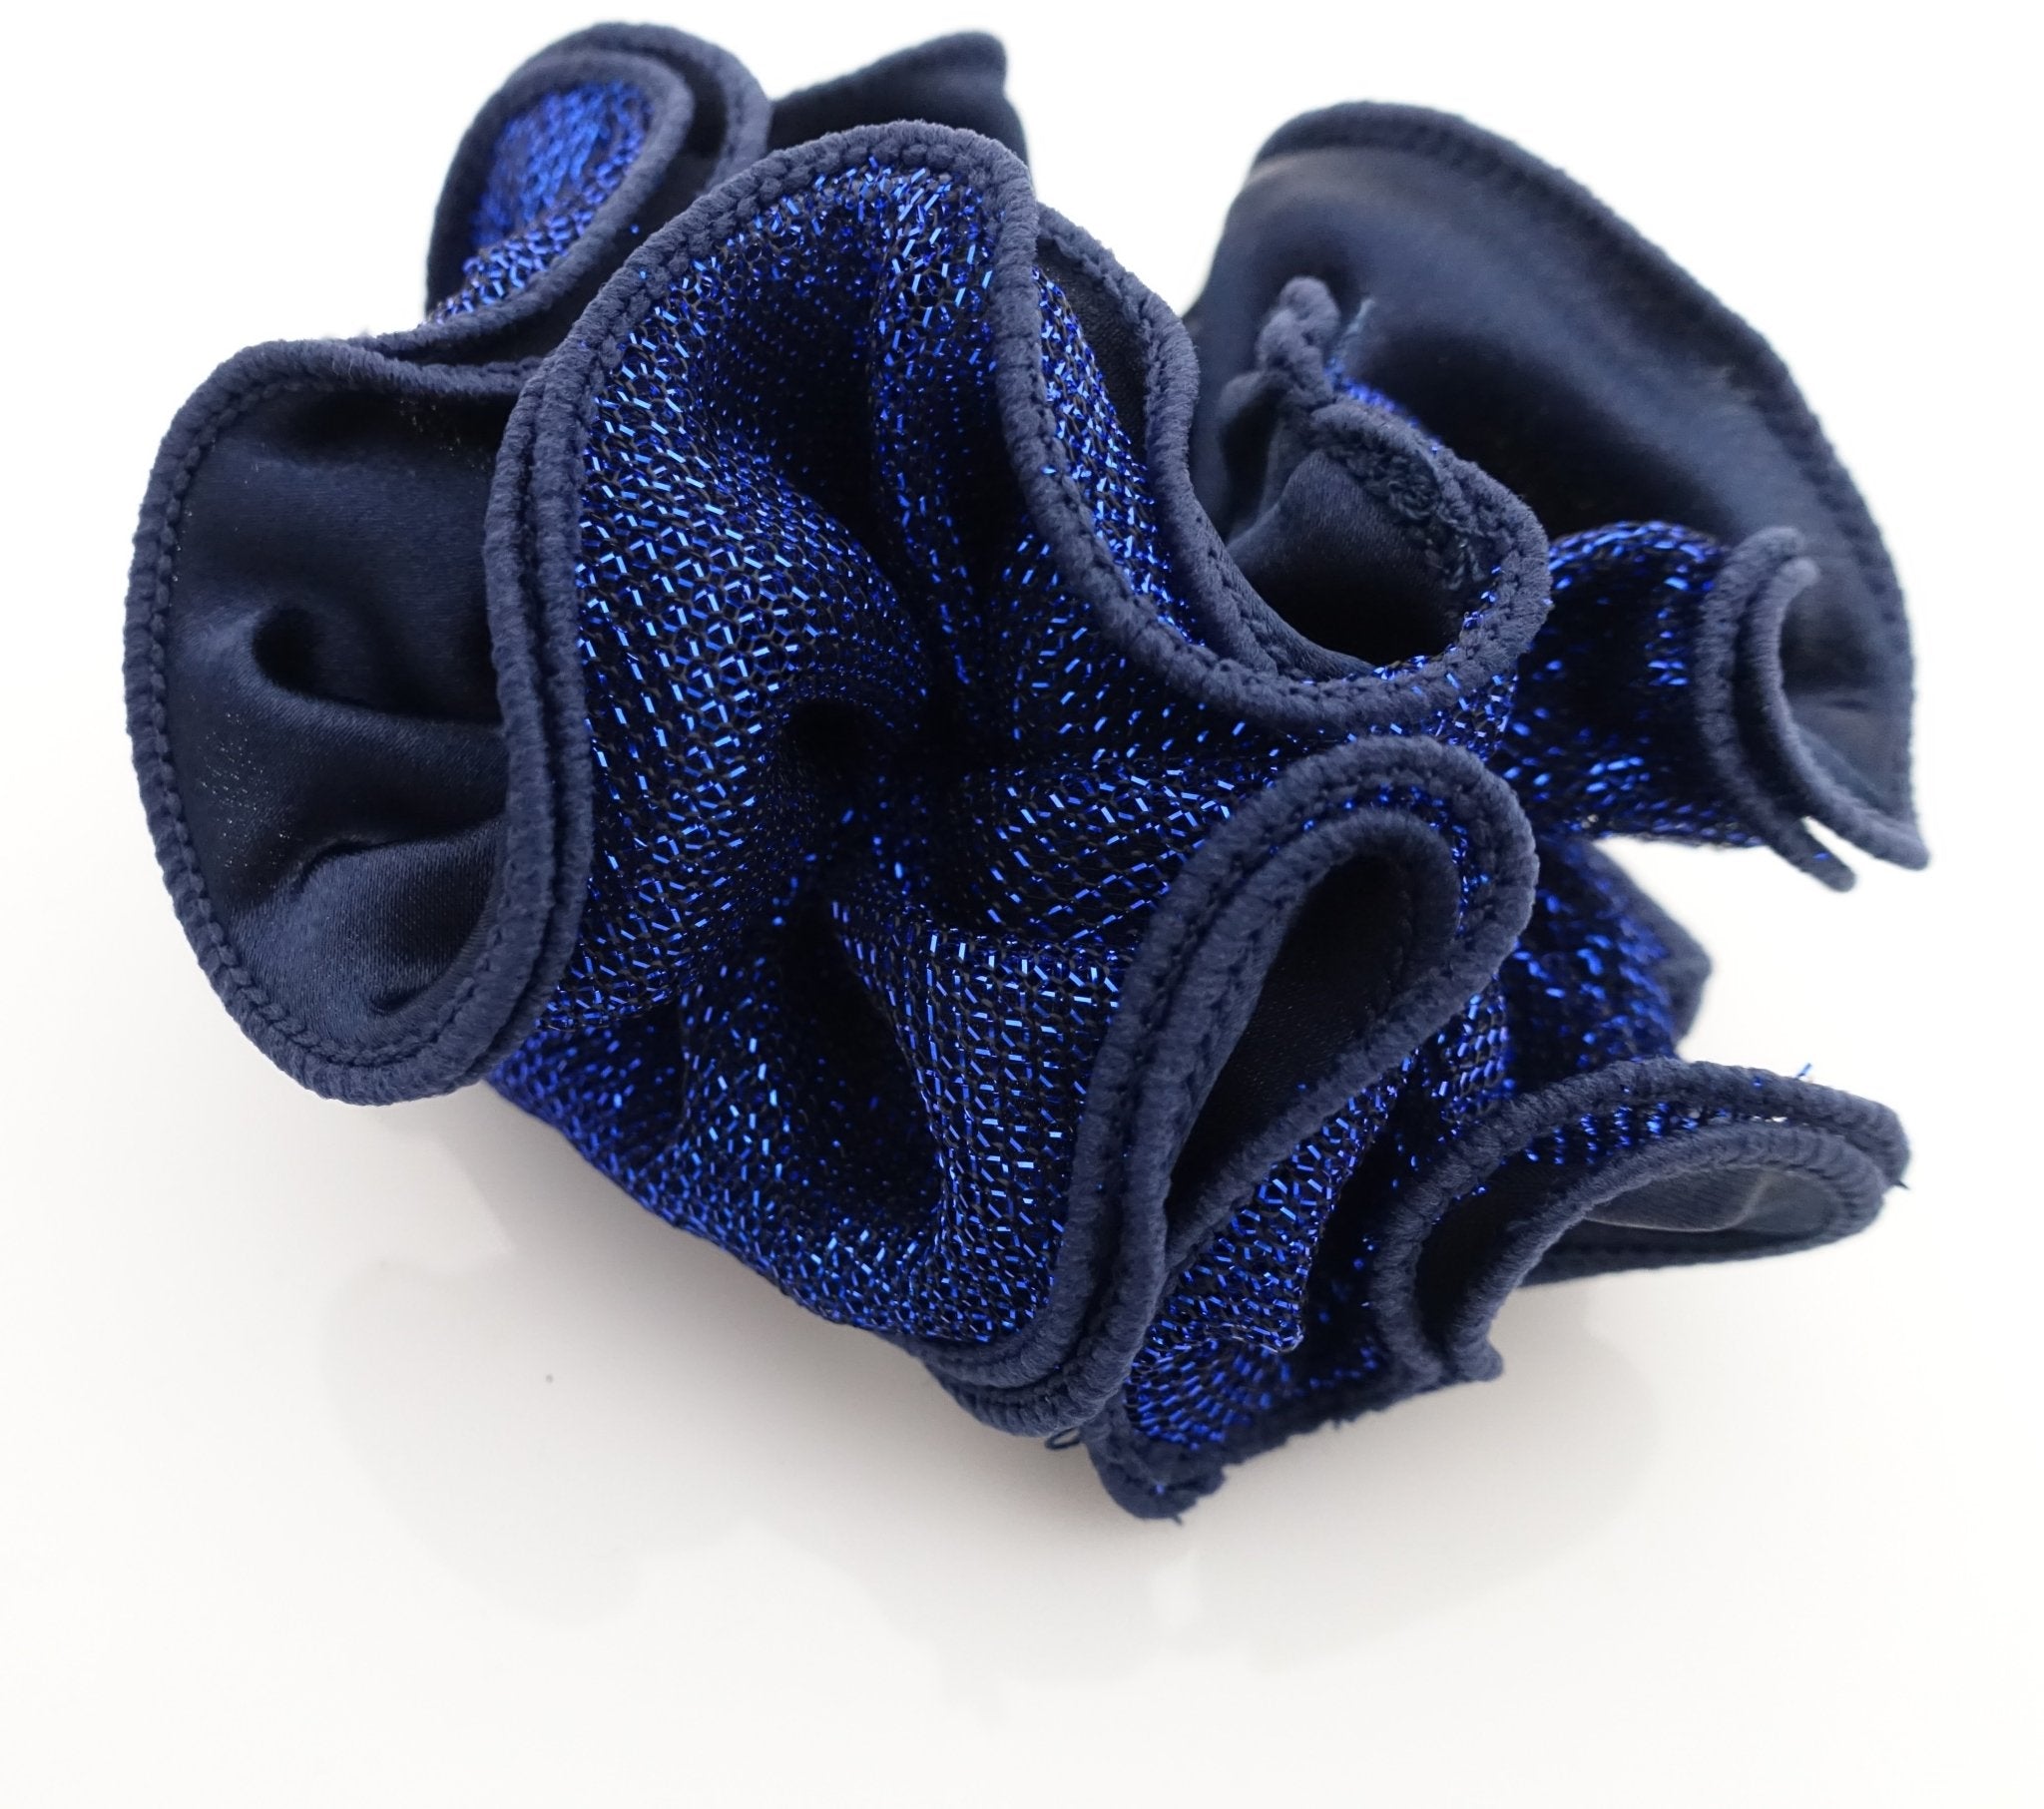 Satin Meshed Fabric Combination Dazzling Ponytail Holder  Elastic Scrunchie.